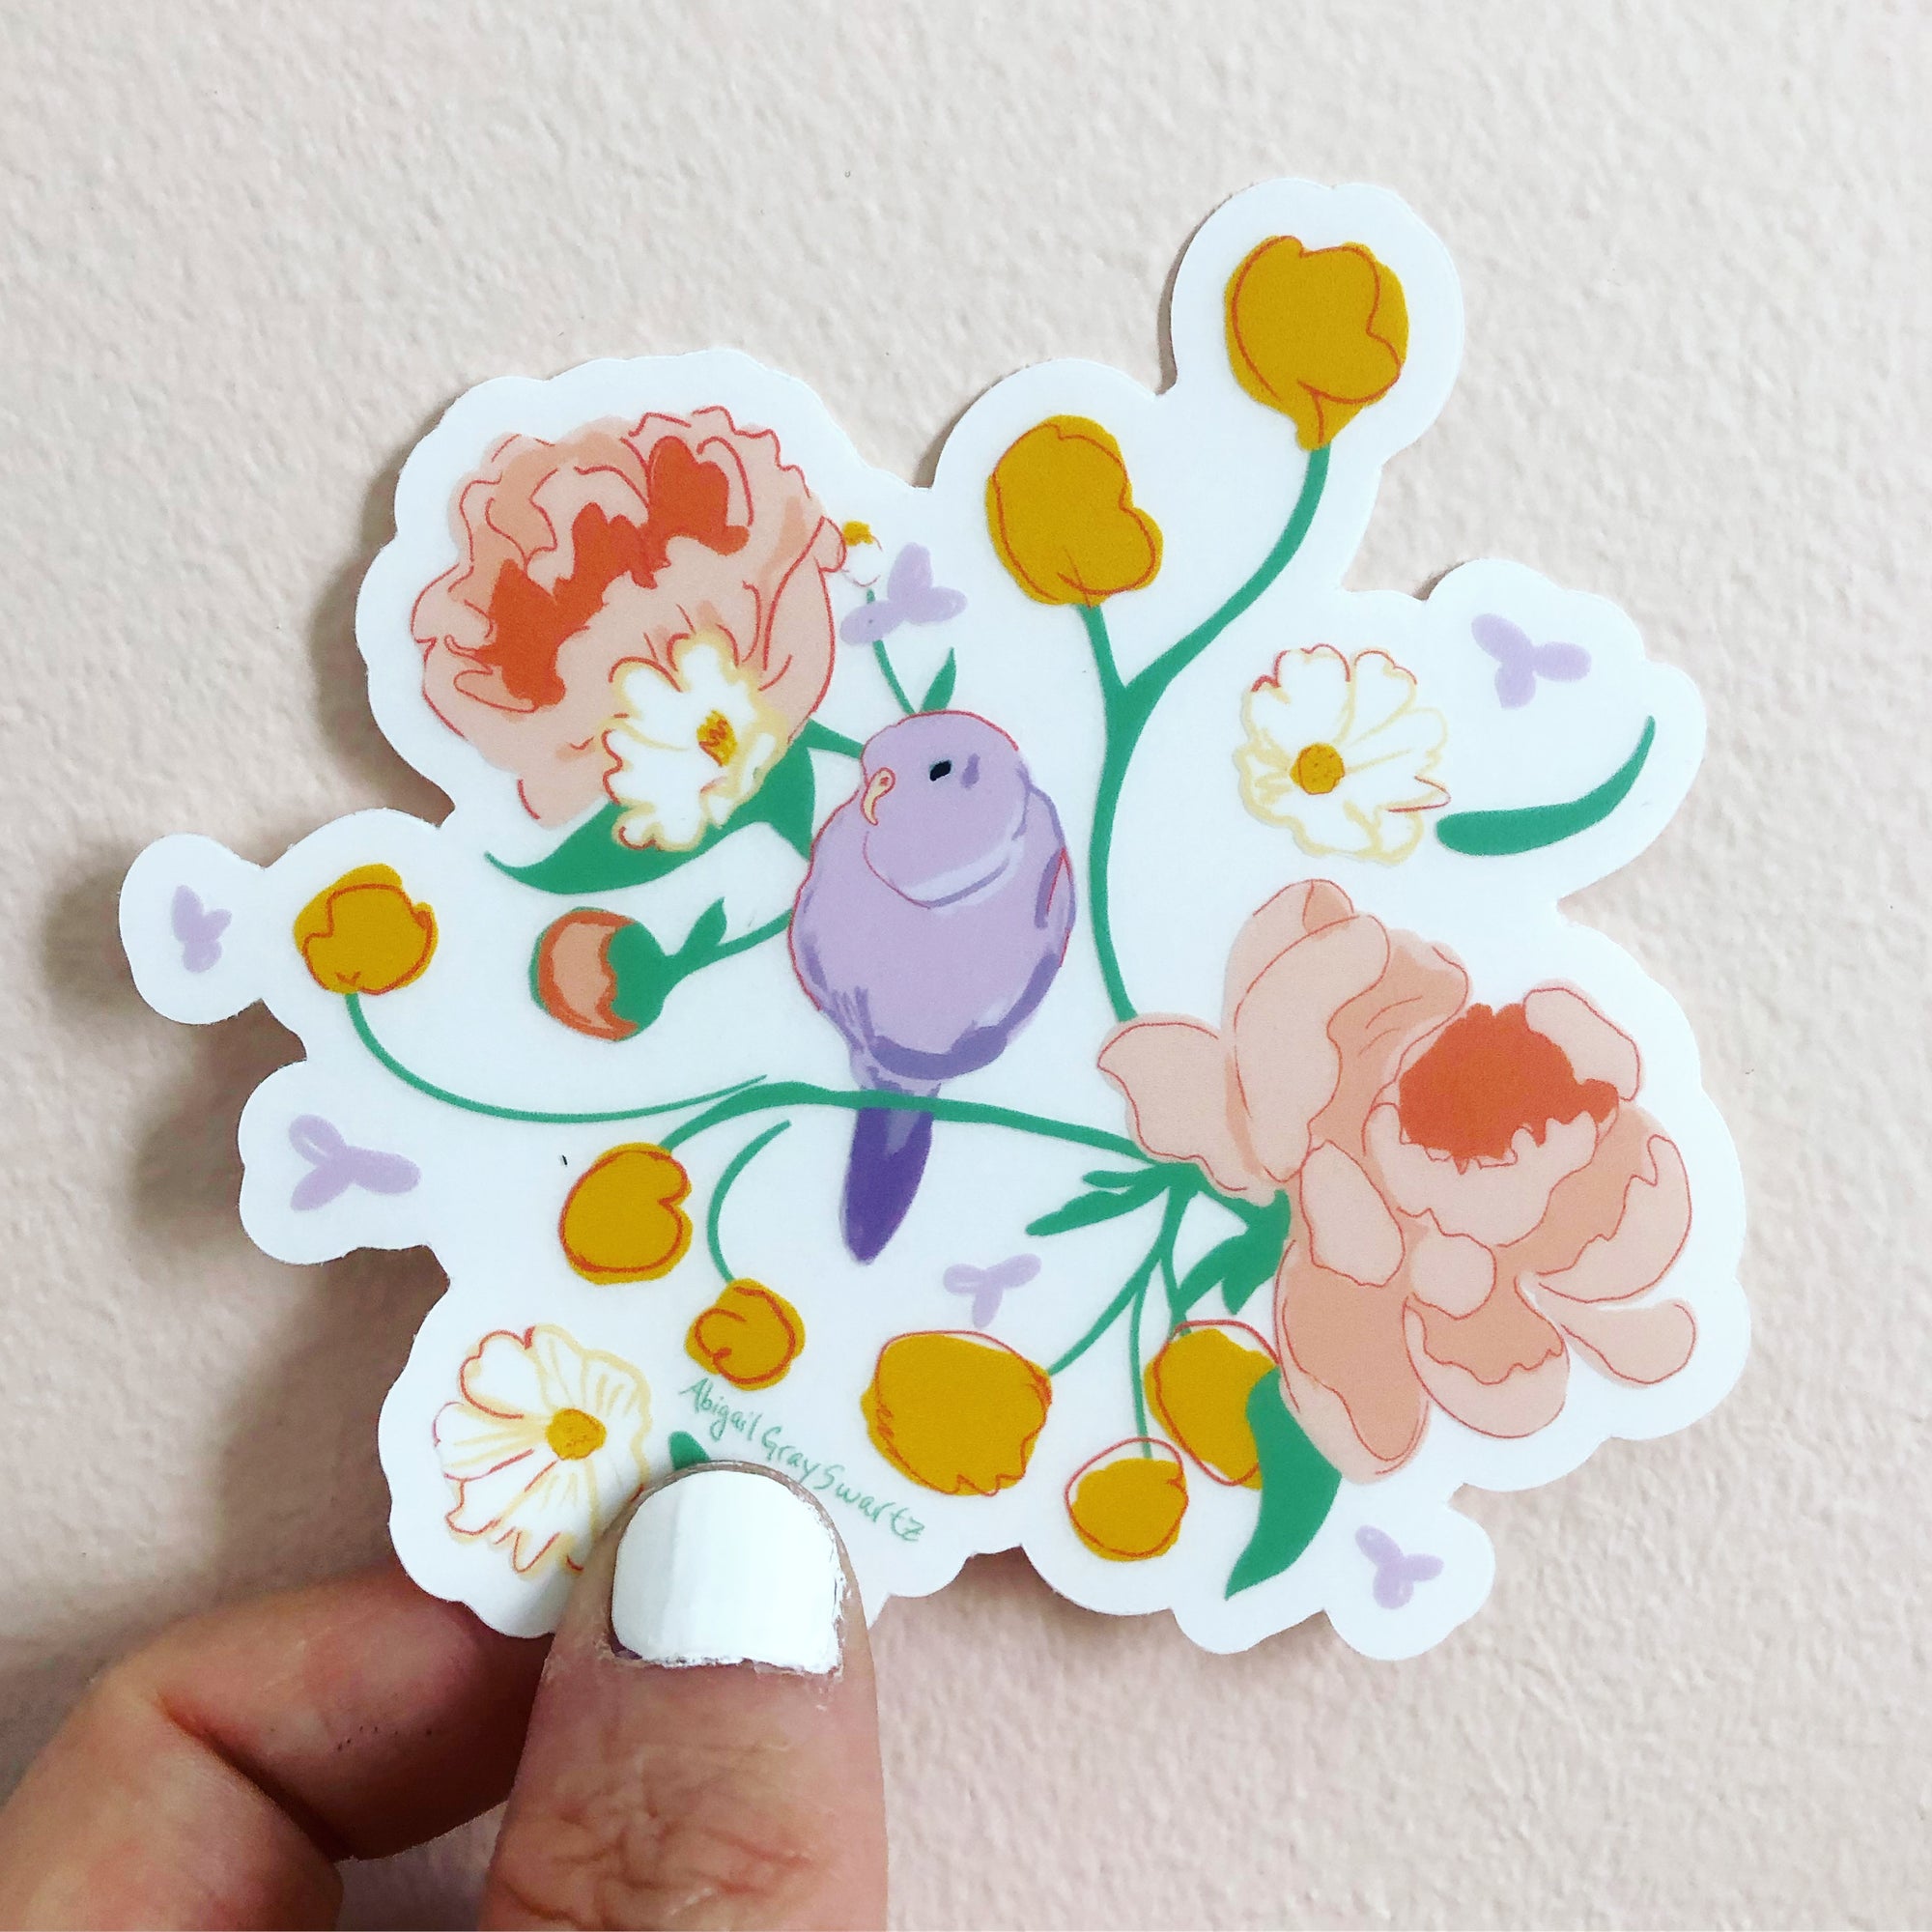 Bird and peonies sticker, botanical sticker by Abigail Gray Swartz of Gray Day Studio